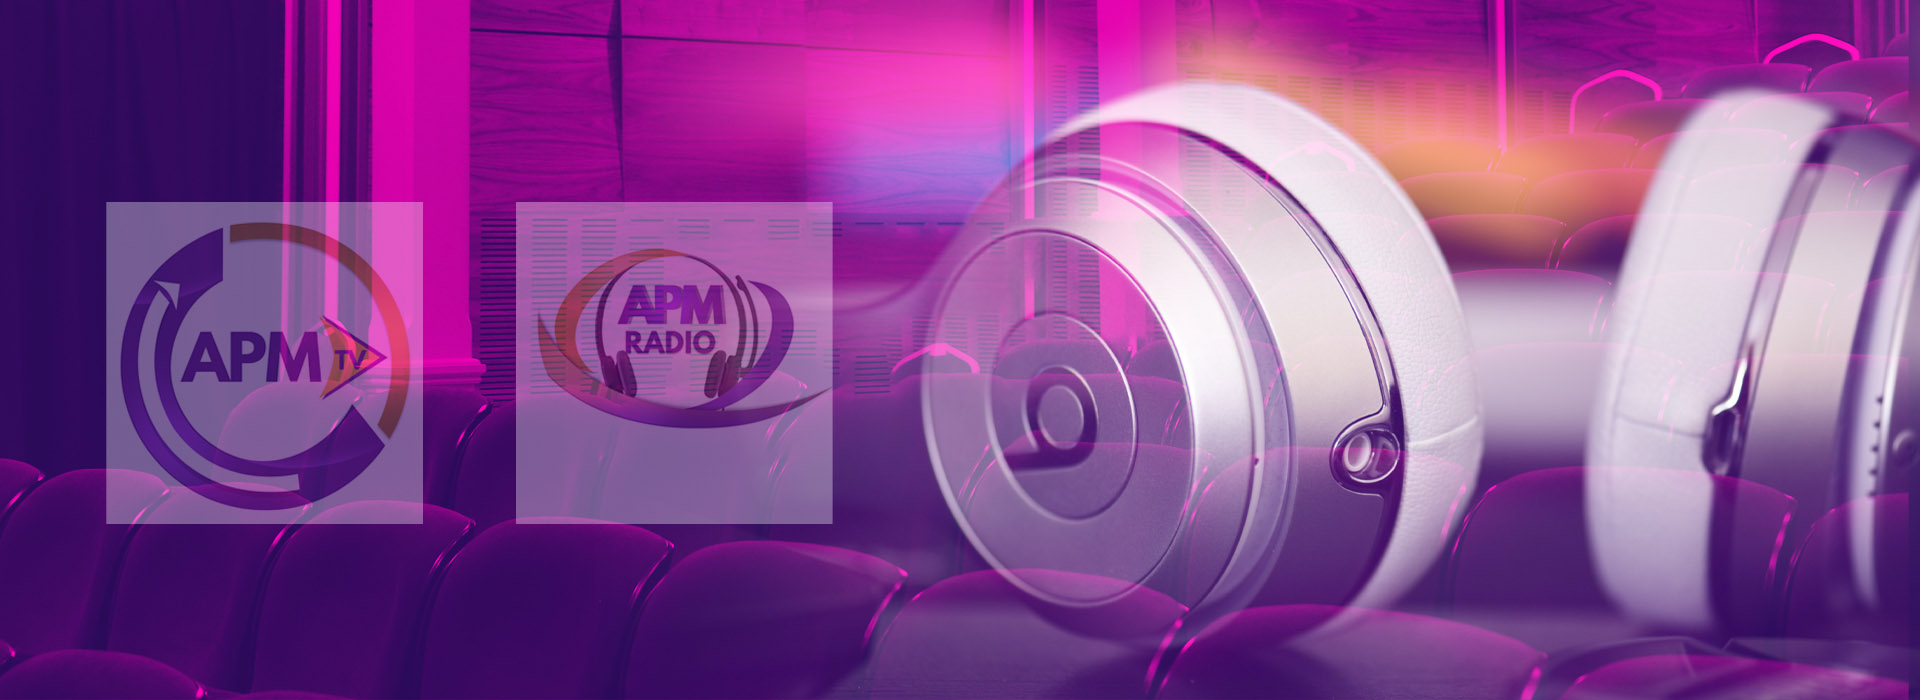 APM_TV__Radio